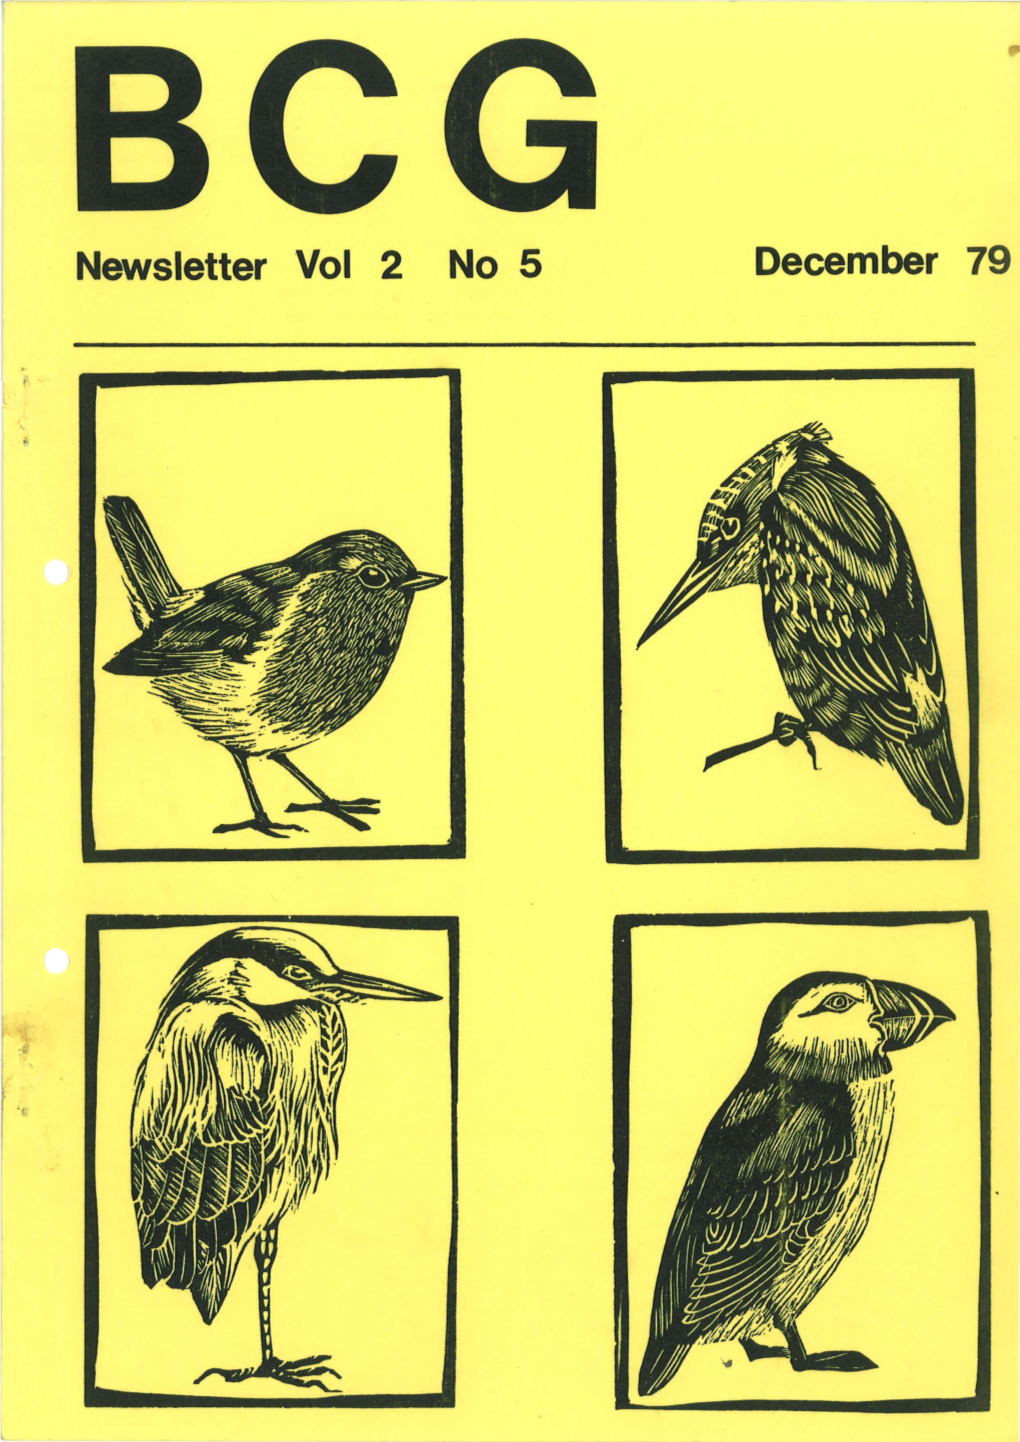 Newsletter Vol 2 No 5 December 79 Editor's Note